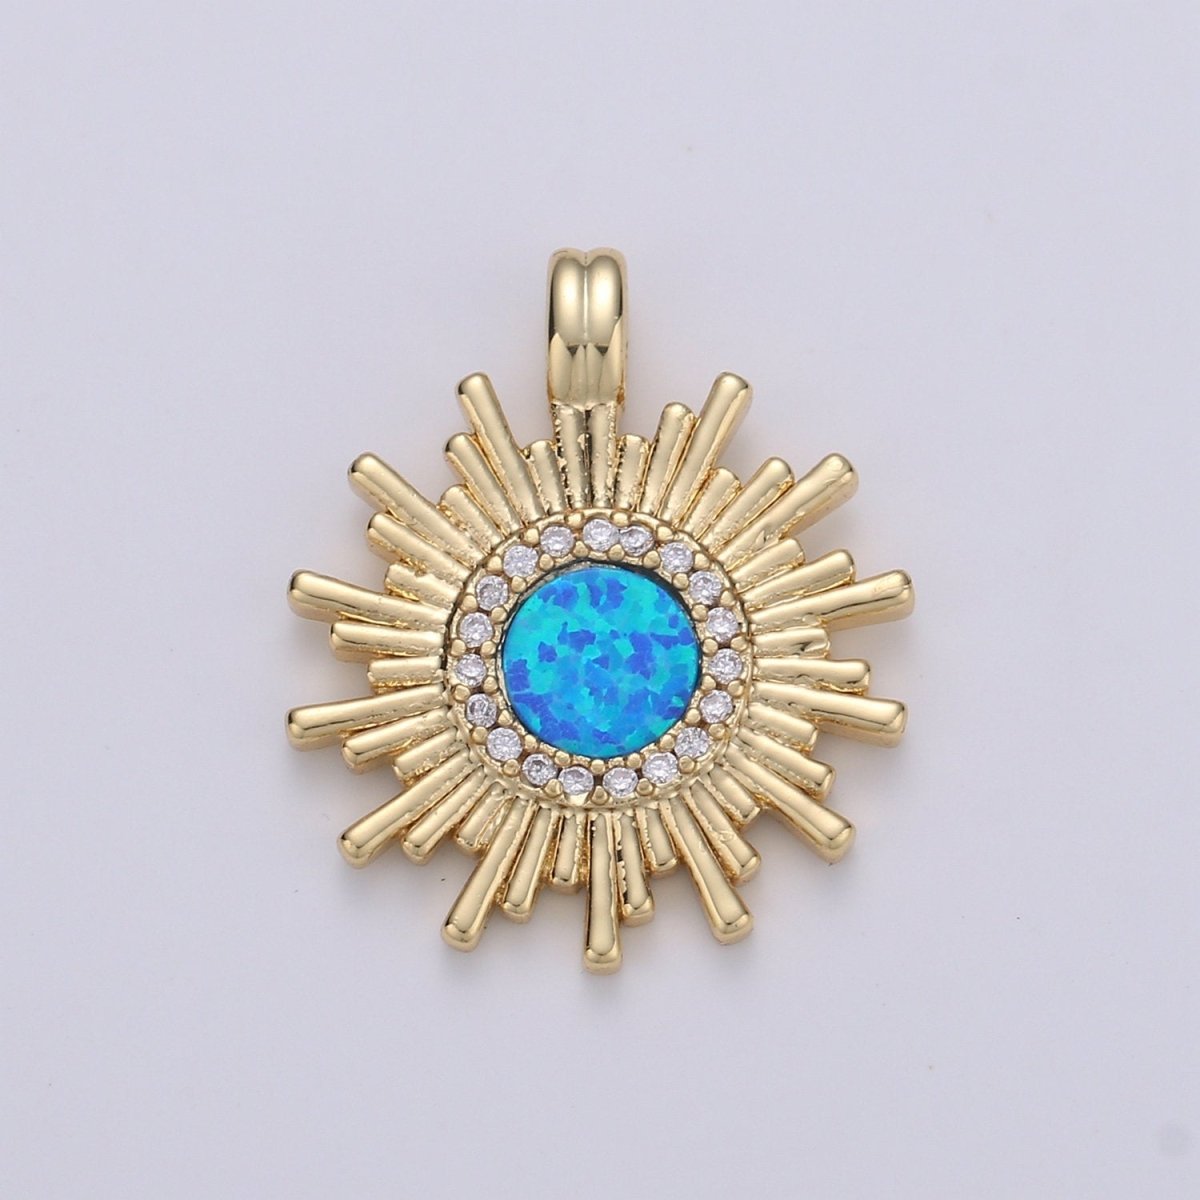 Dainty 14k Gold Filled Sun Burst Charm Opal Round SunBurst Medallion Pendant, 24x18mm, Micro Pave Gold Sun Celestial Jewelry I-676 - DLUXCA